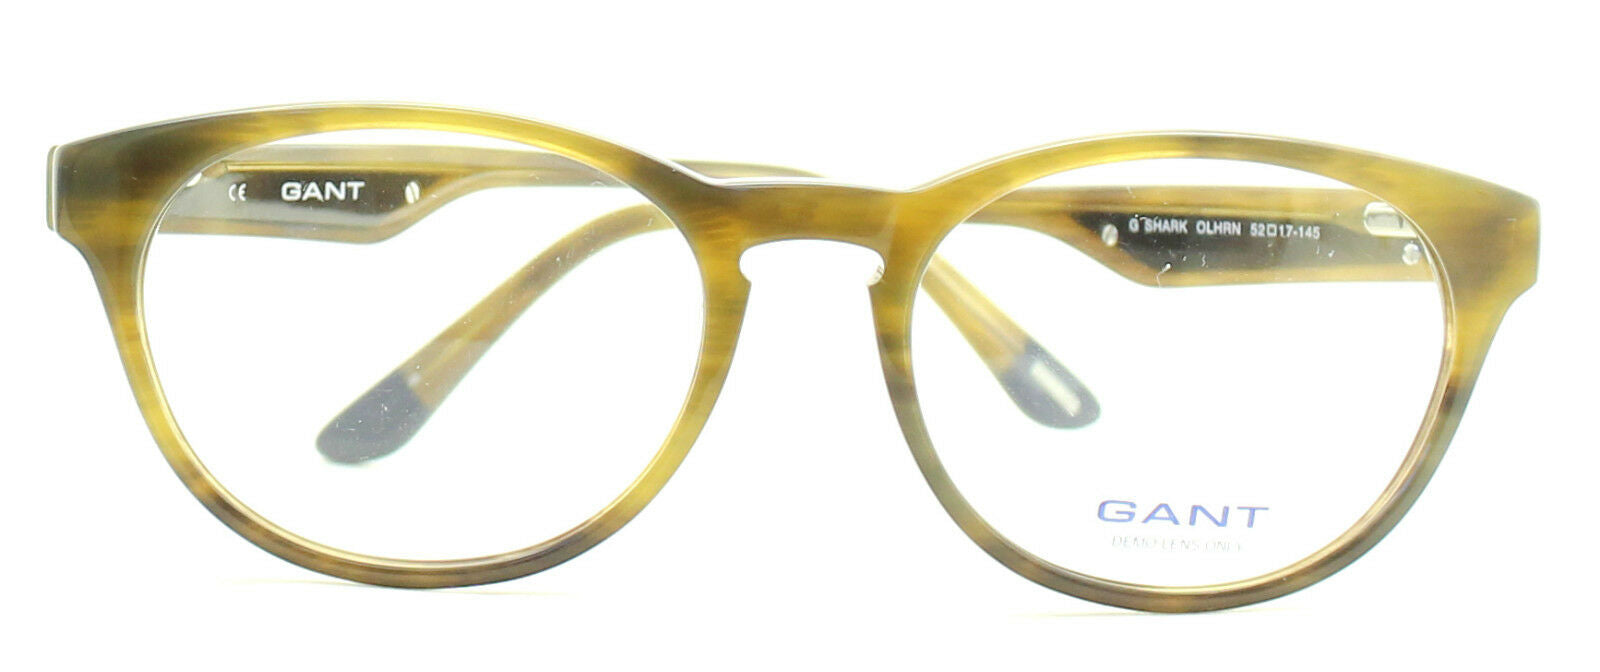 GANT G SHARK OLHRN RX Optical Eyewear FRAMES Glasses Eyeglasses New BNIB TRUSTED